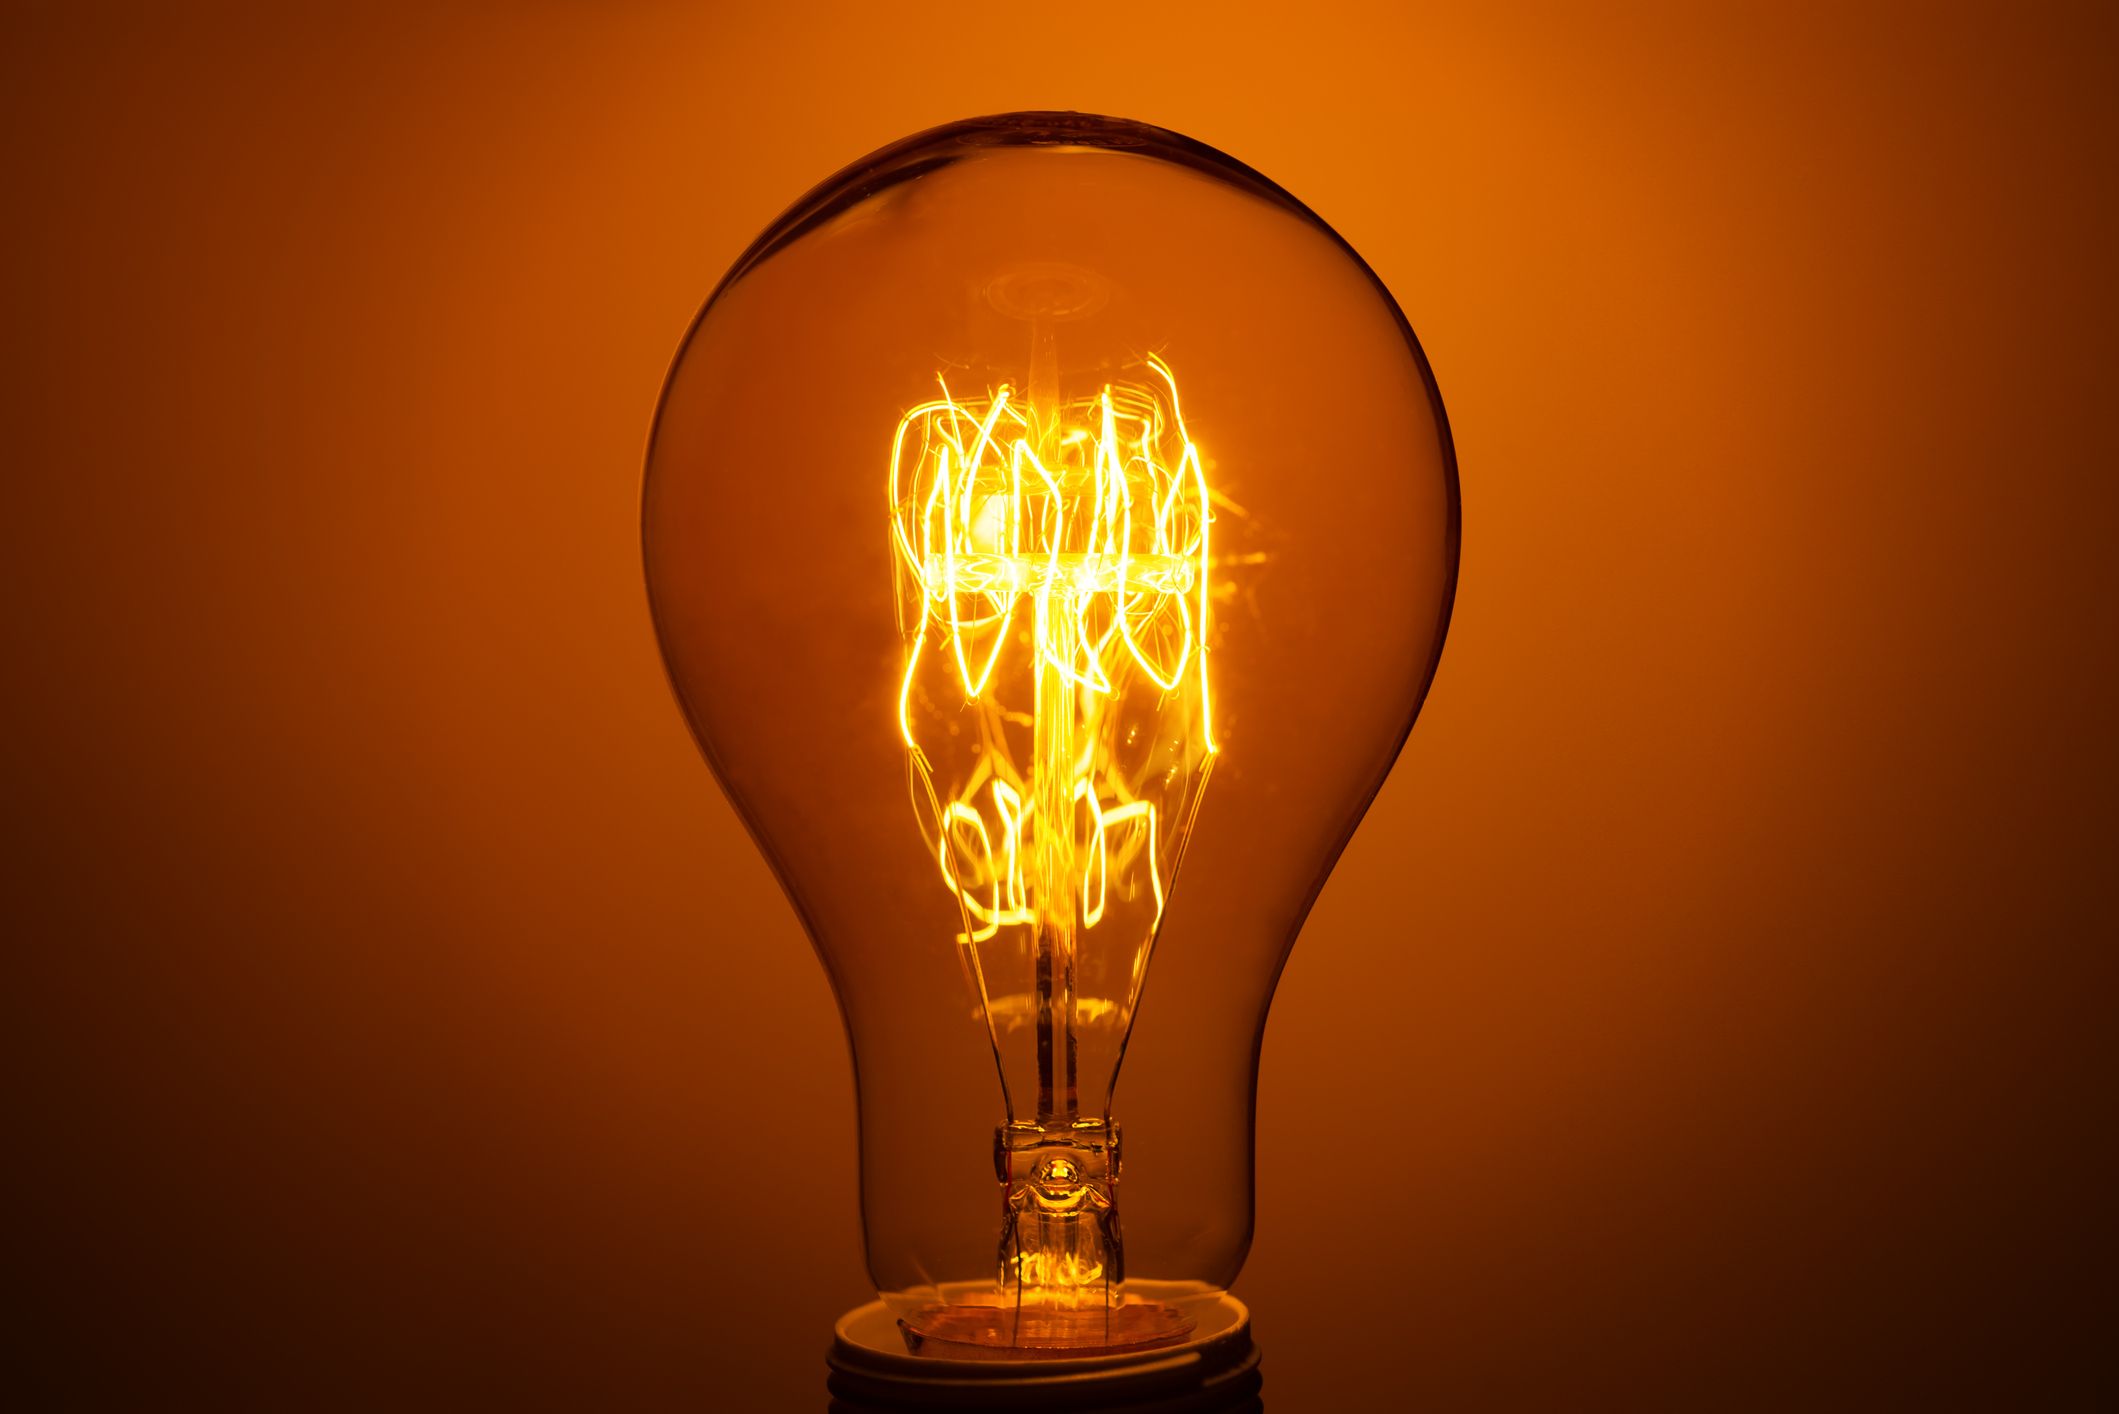 Will any light bulb work as an oven light bulb?